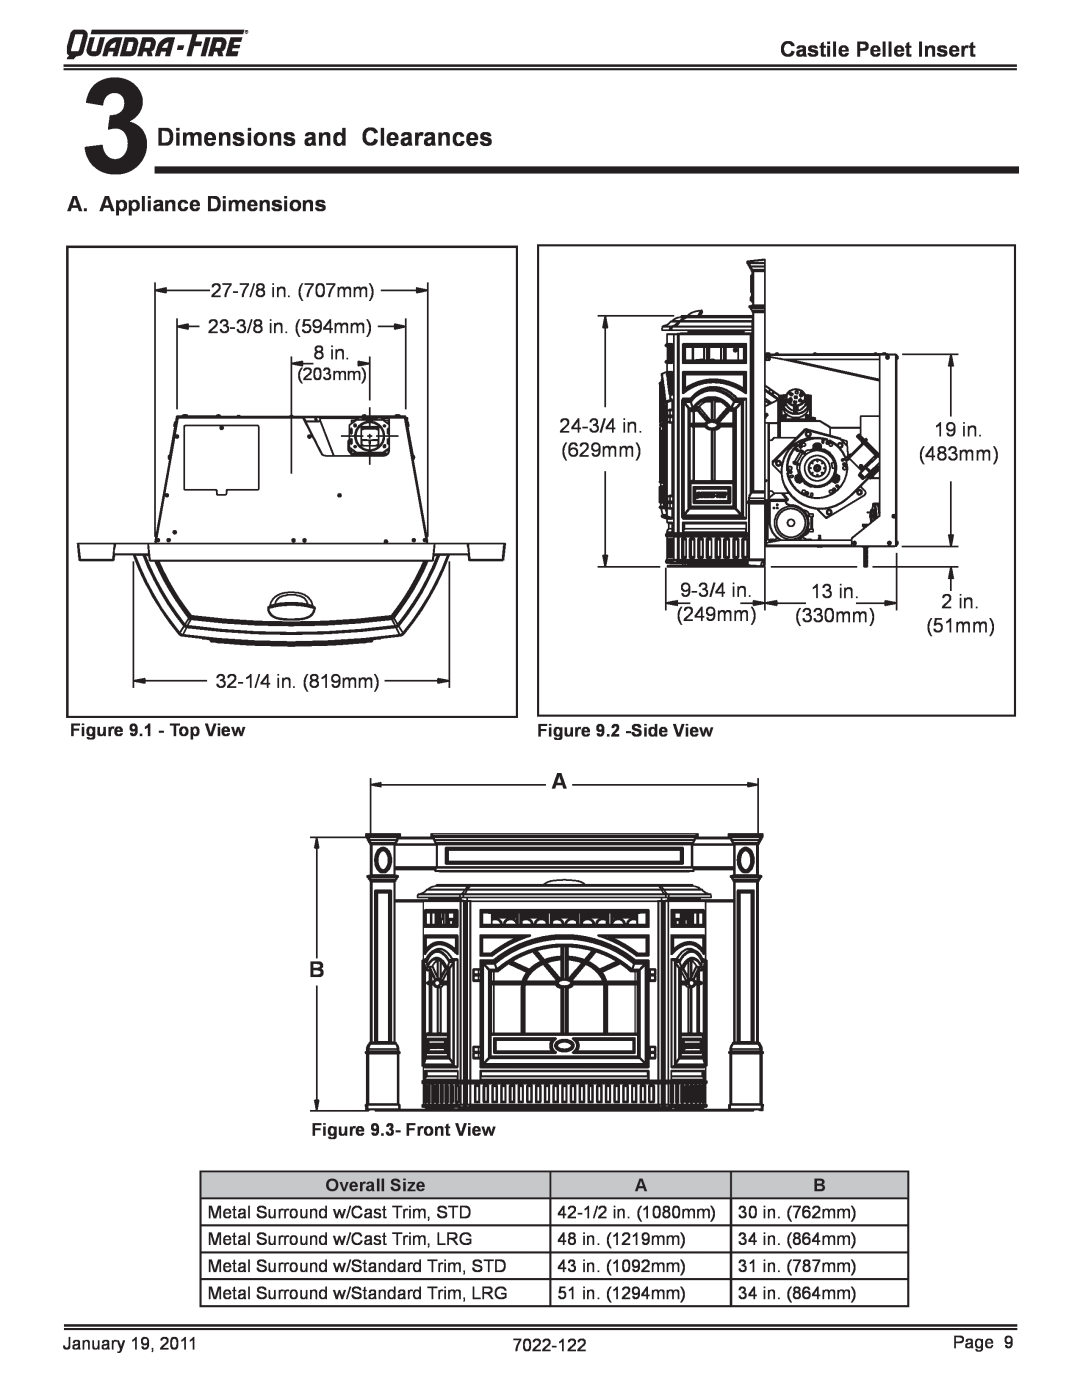 Quadra-Fire CASTILEI-MBK owner manual 3Dimensions and Clearances, A. Appliance Dimensions, Castile Pellet Insert 